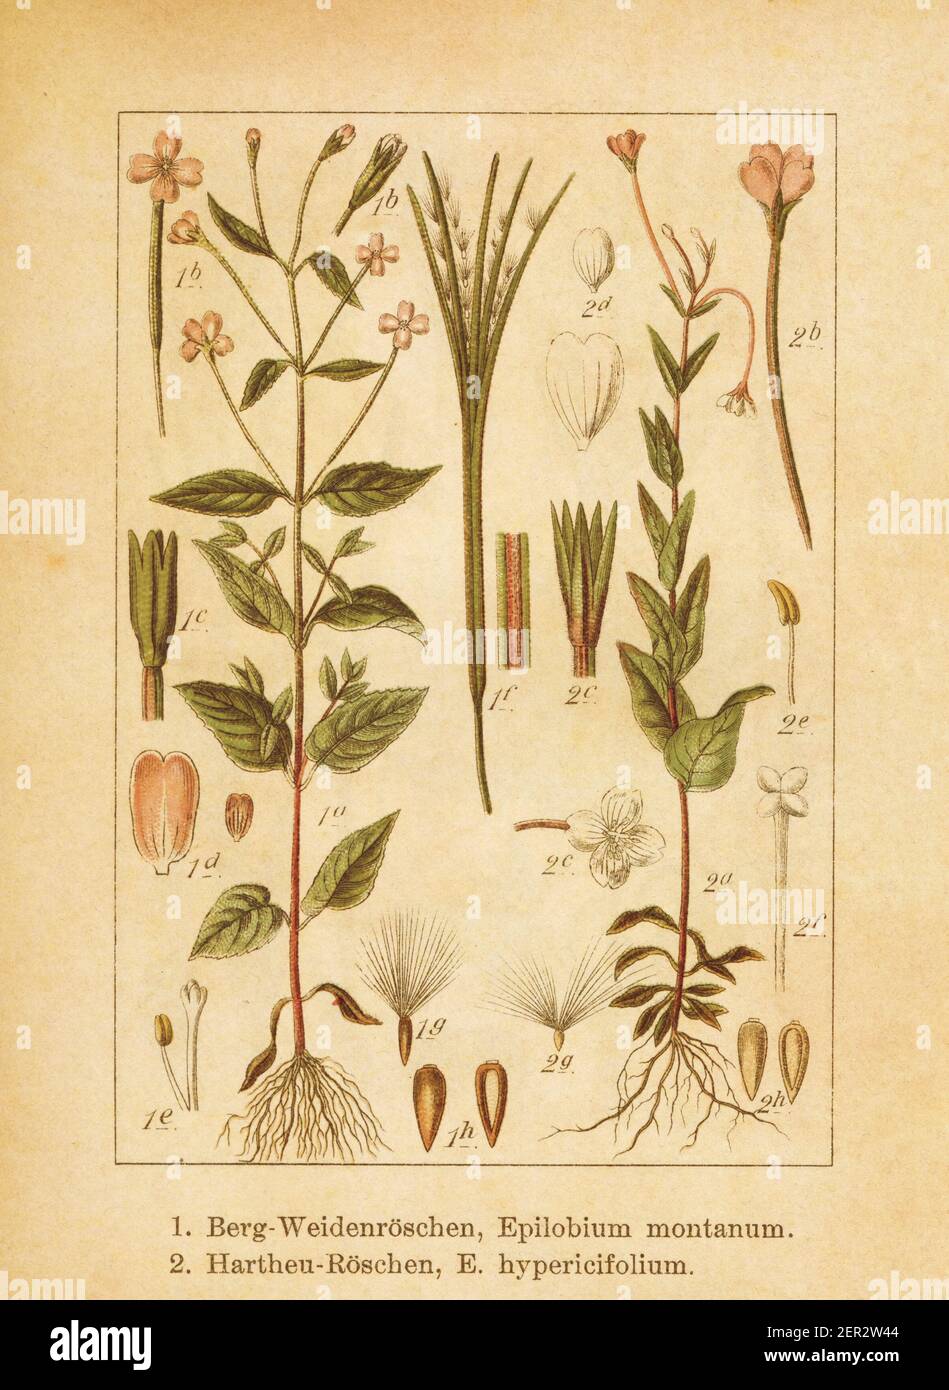 Antique illustration of an epilobium montanum (also known as broad-leaved willowherb) and epilobium hypericifolium. Engraved by Jacob Sturm (1771-1848 Stock Photo